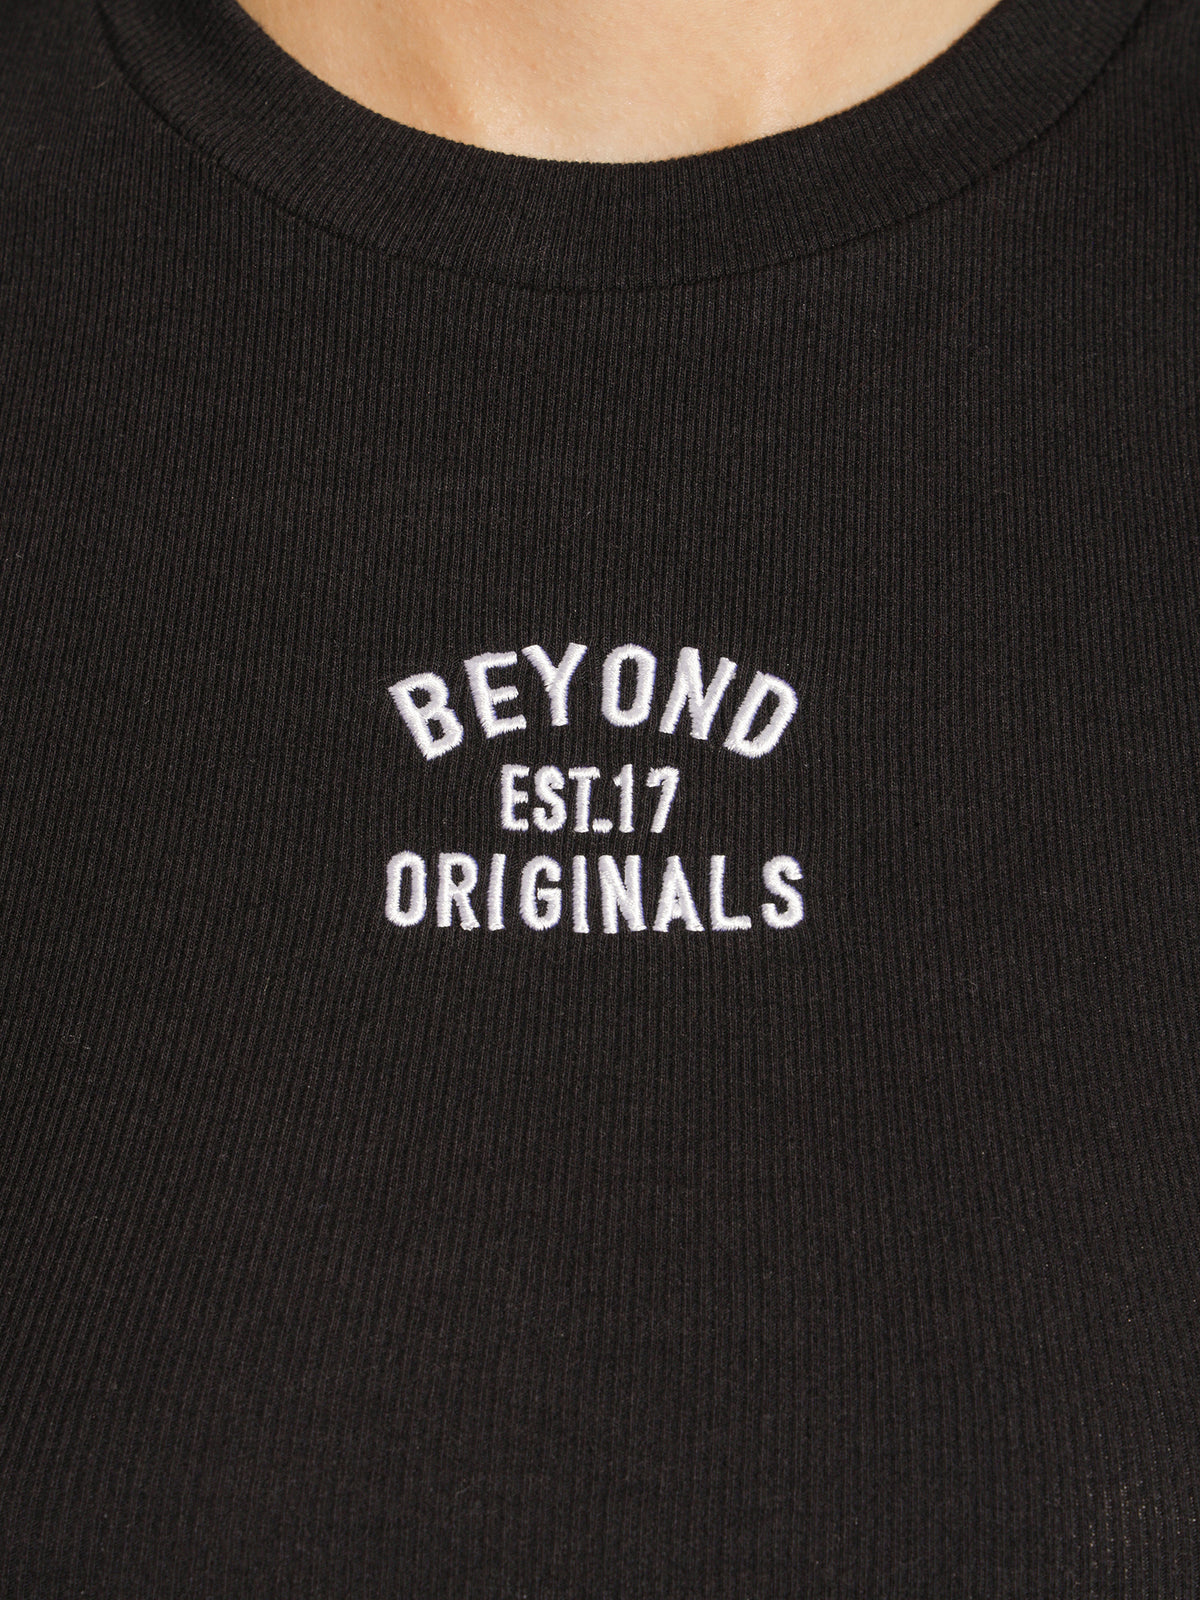 Beyond Originals T-Shirt in Black